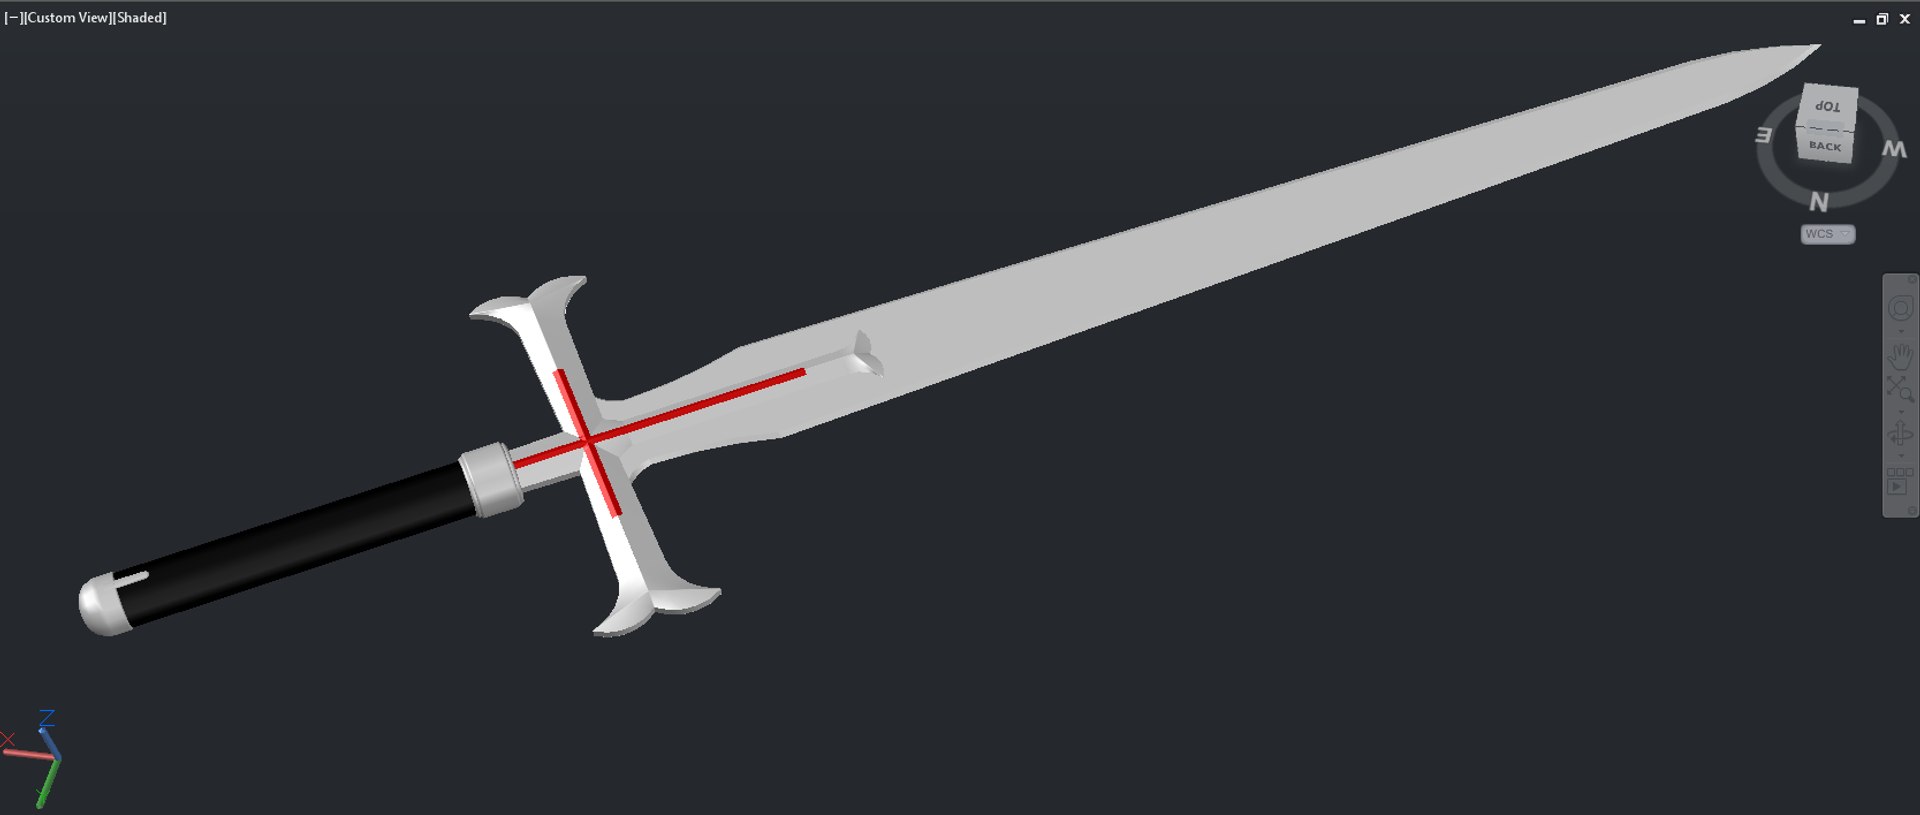 3d Heathcliff Sword Model